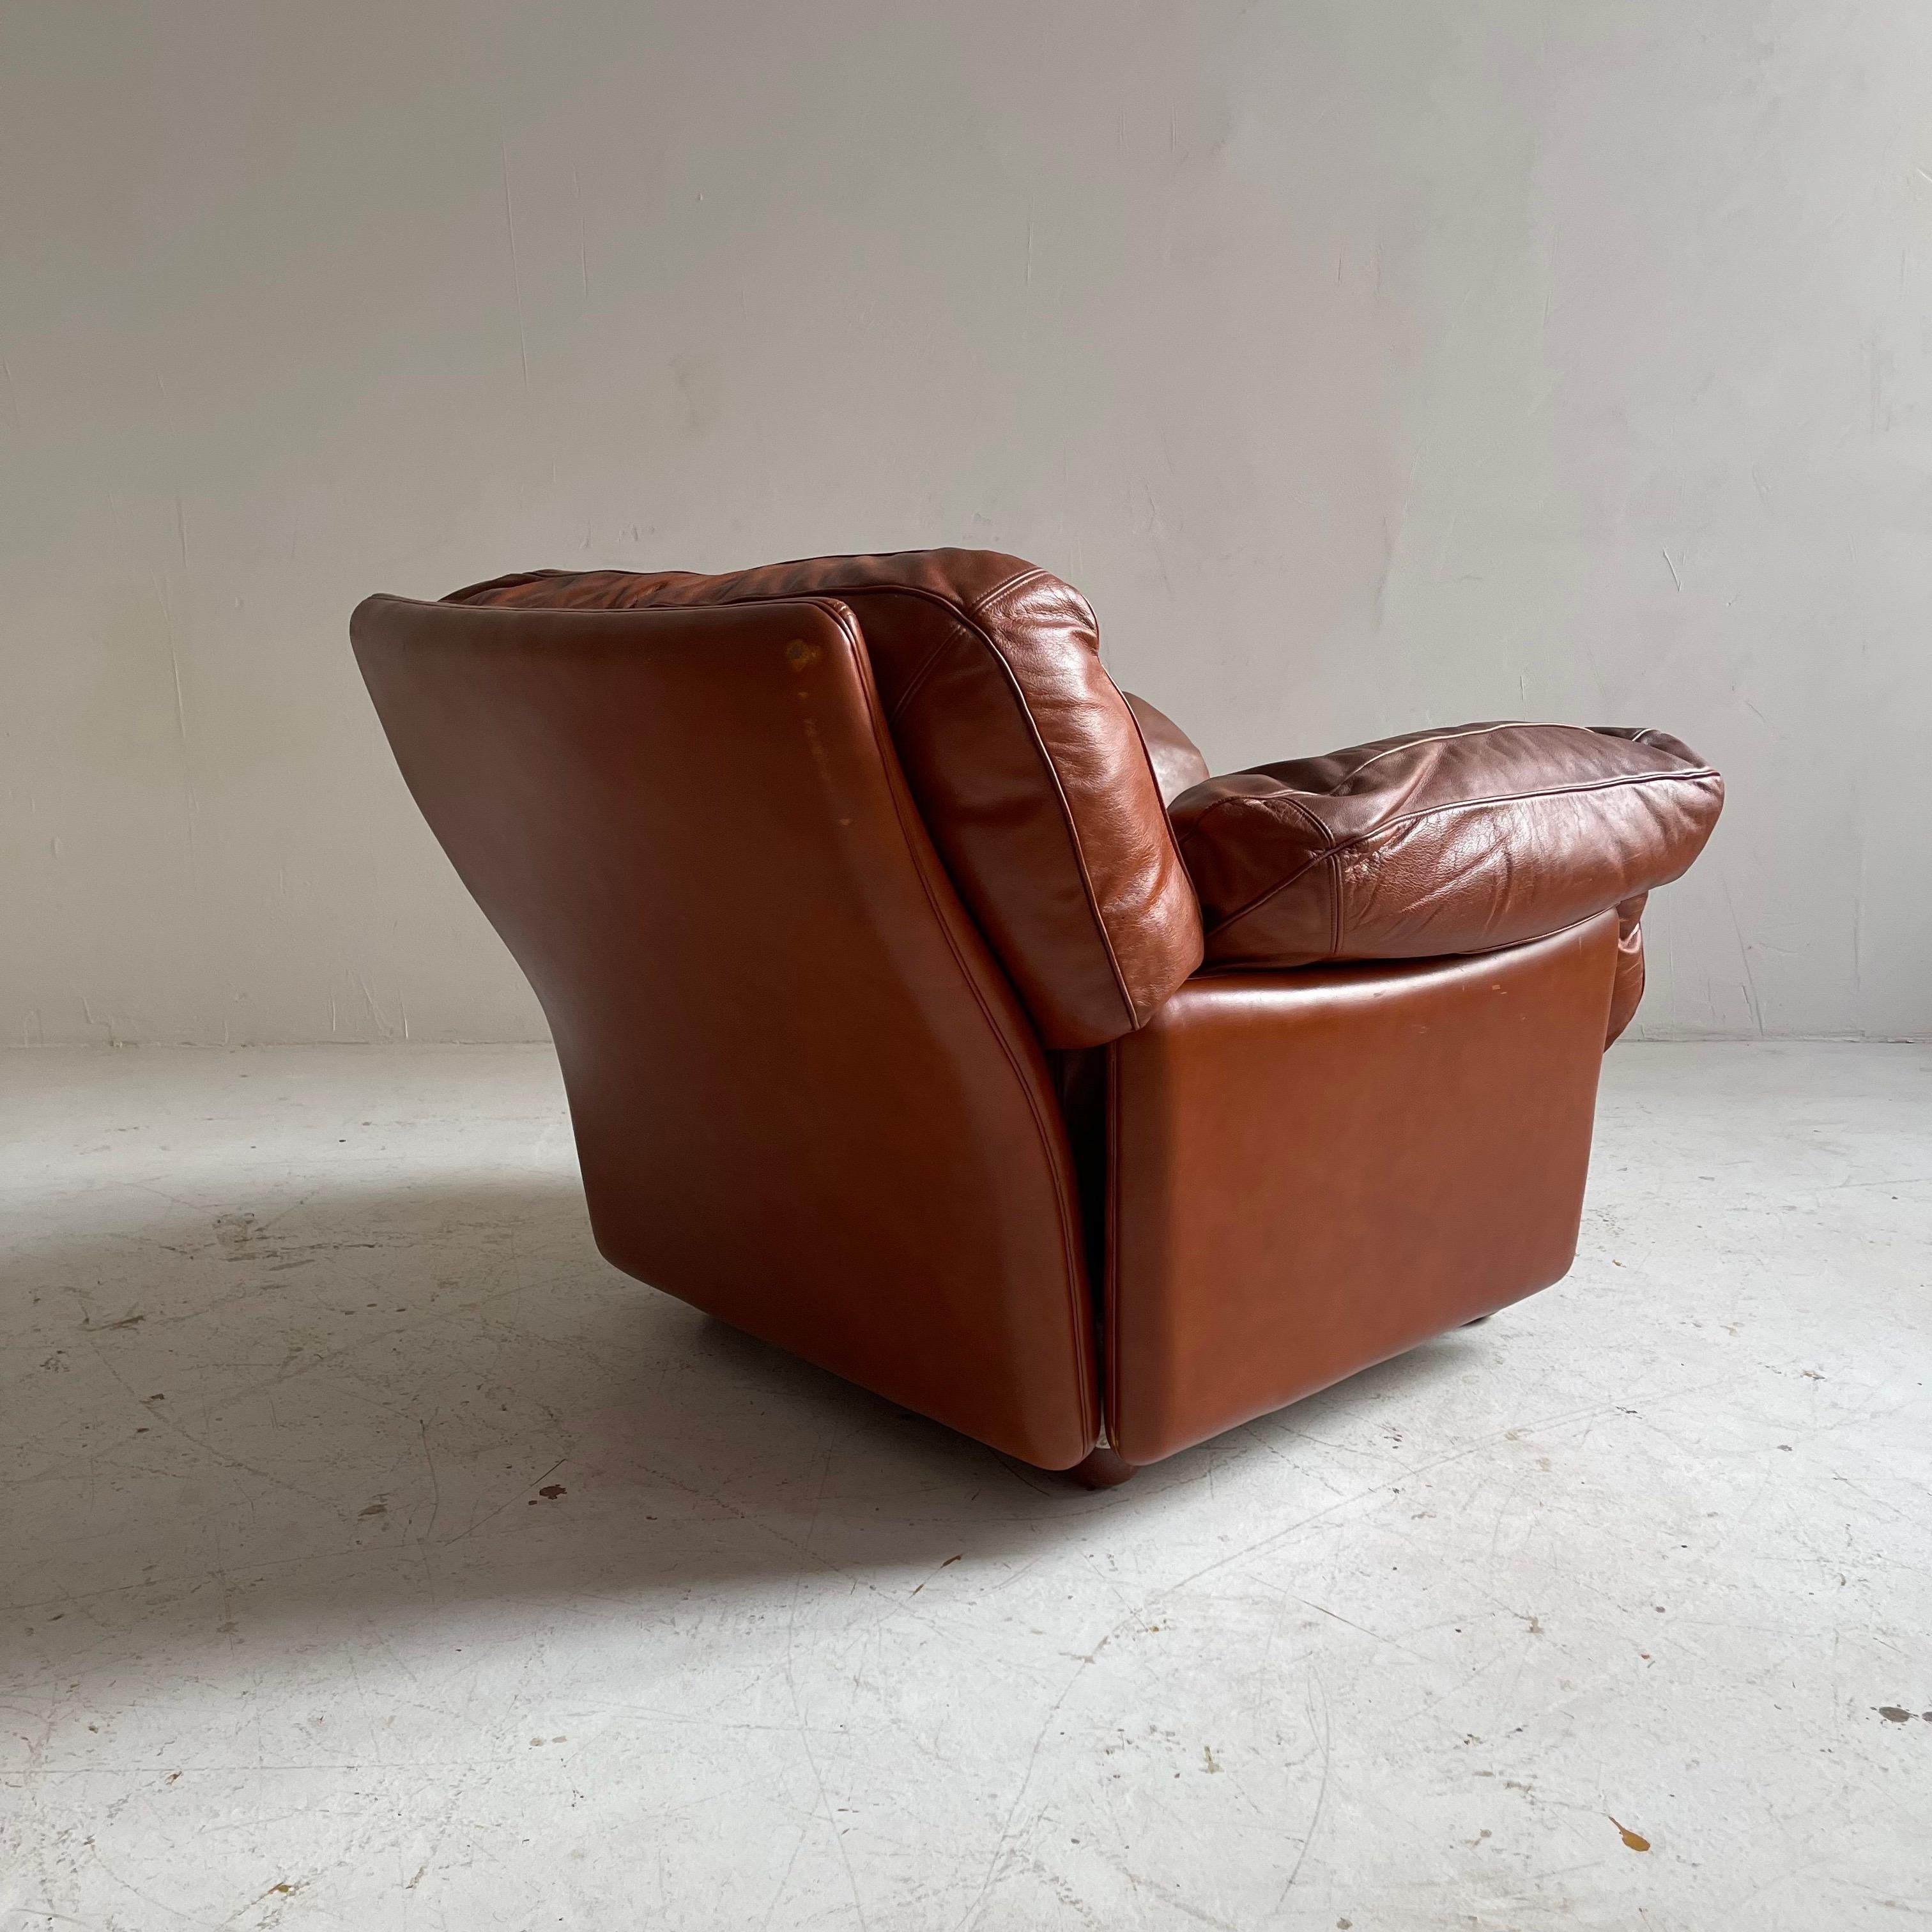 Tito Agnoli Cognac Leather Sofa Suite Model 'Poppy' Poltrona Frau, Italy 1970s For Sale 6